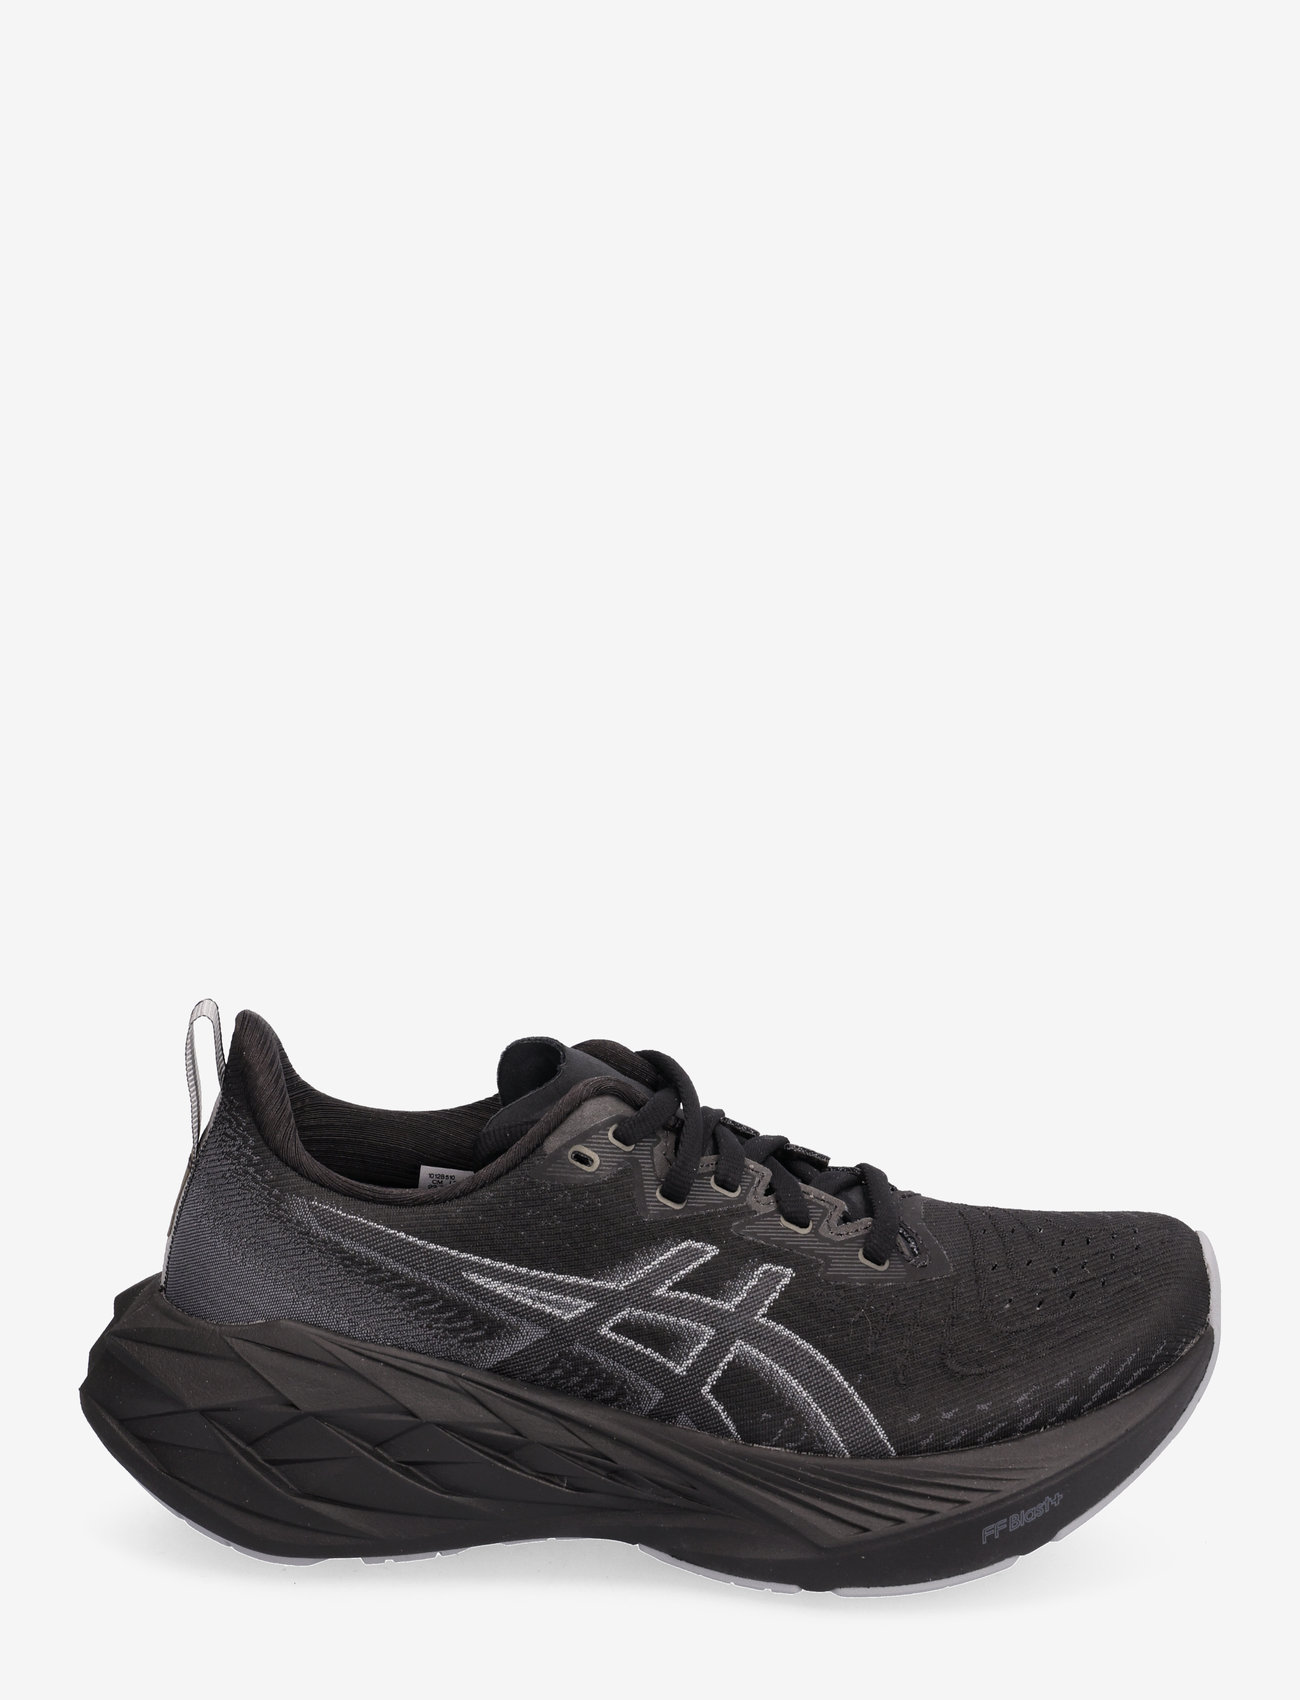 Asics - NOVABLAST 4 - shoes - black/graphite grey - 1